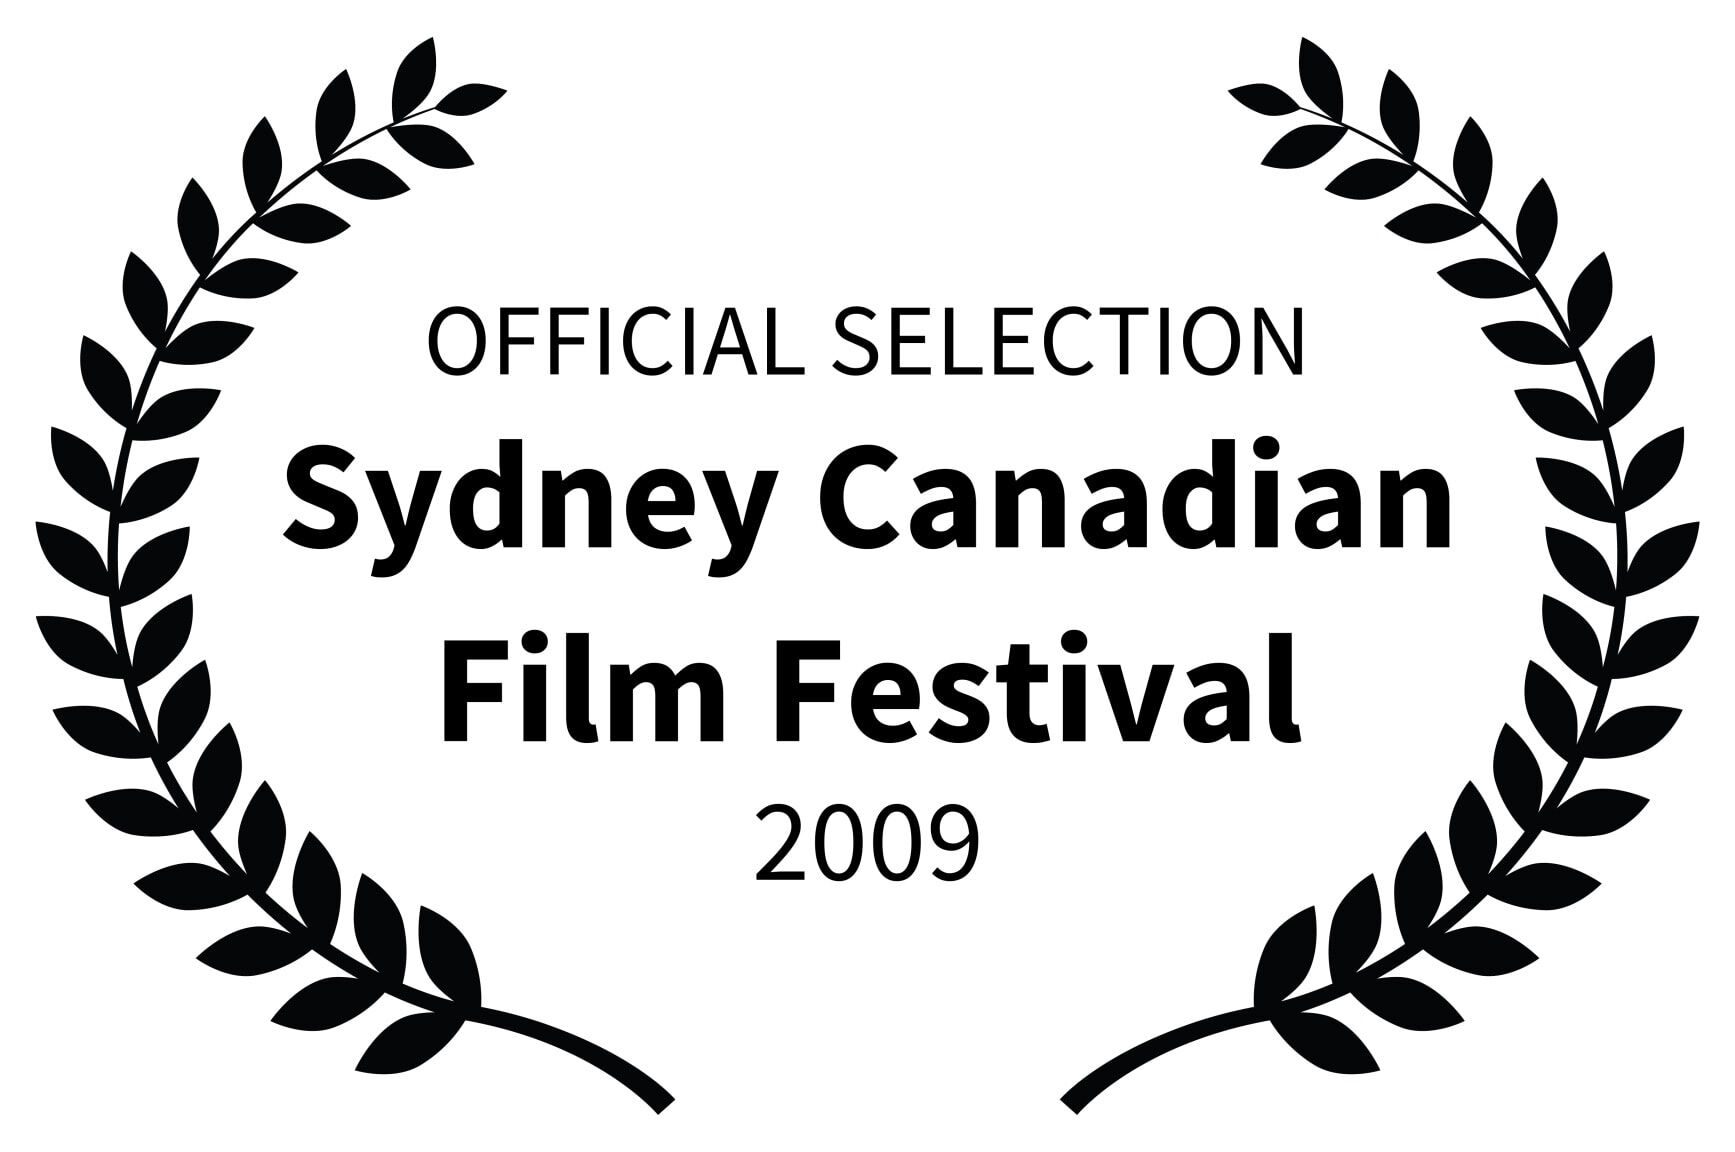 OFFICIAL SELECTION - Sydney Canadian Film Festival - 2009